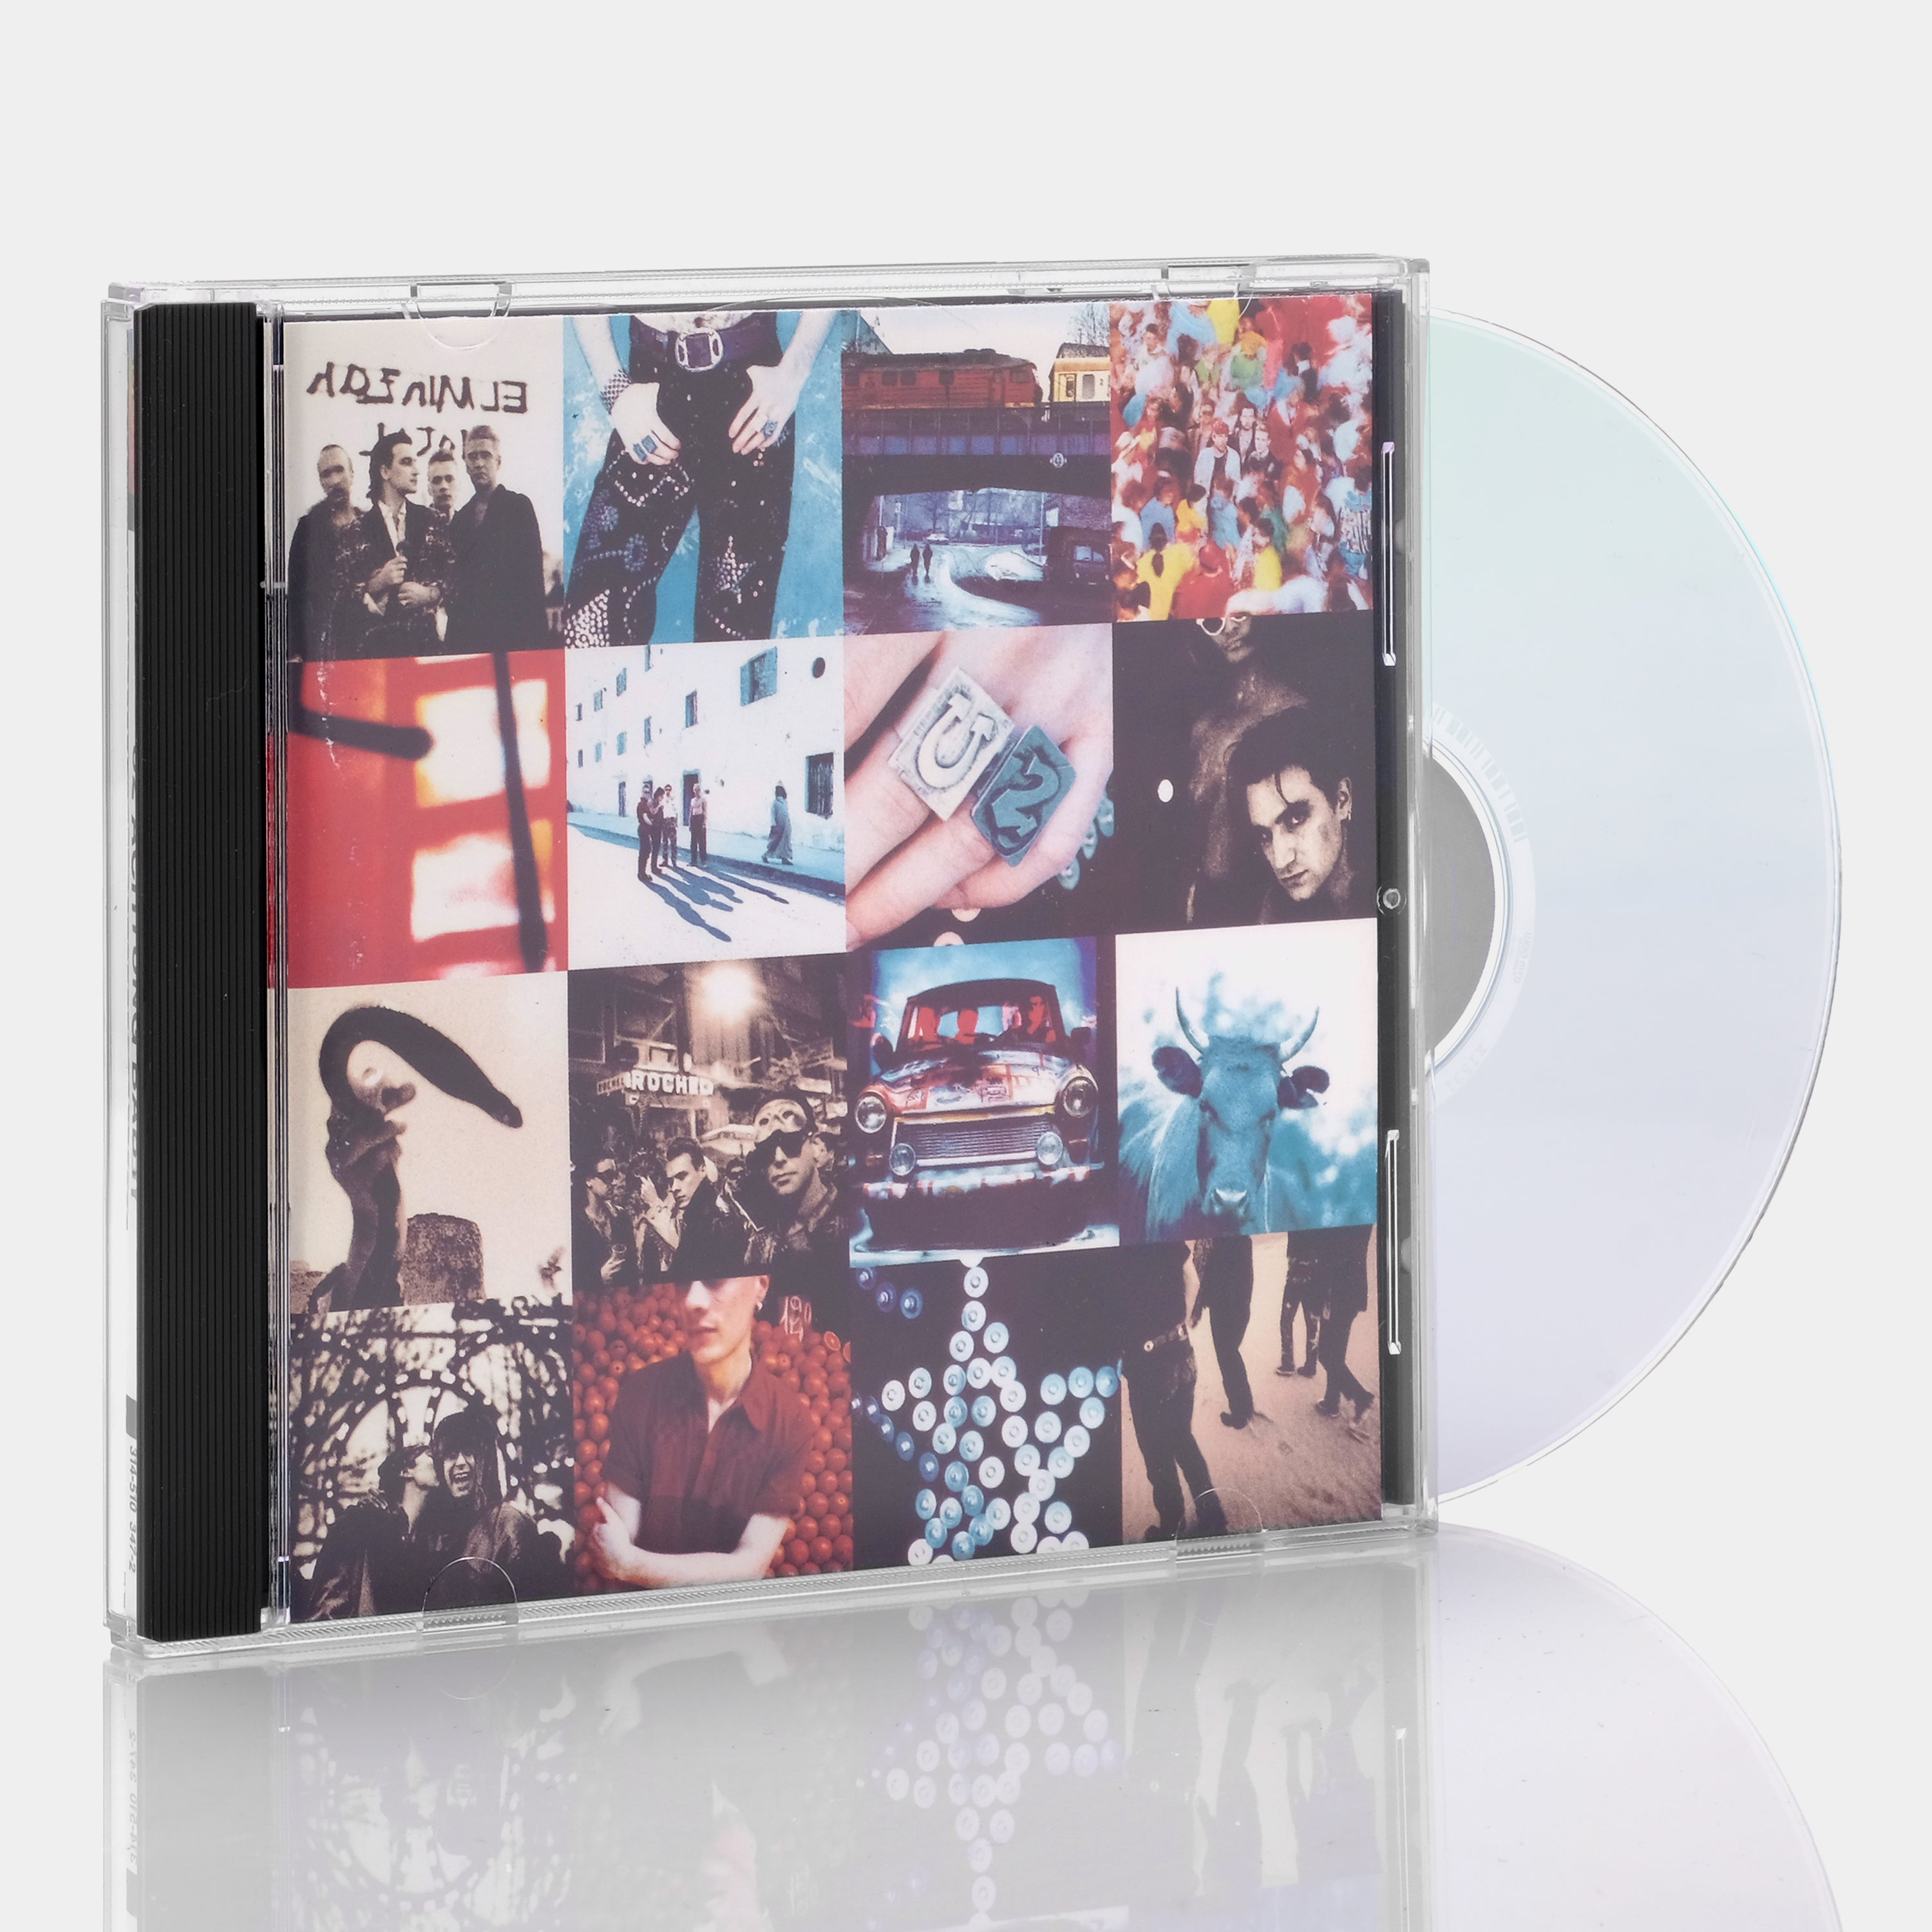 U2 - Achtung Baby CD